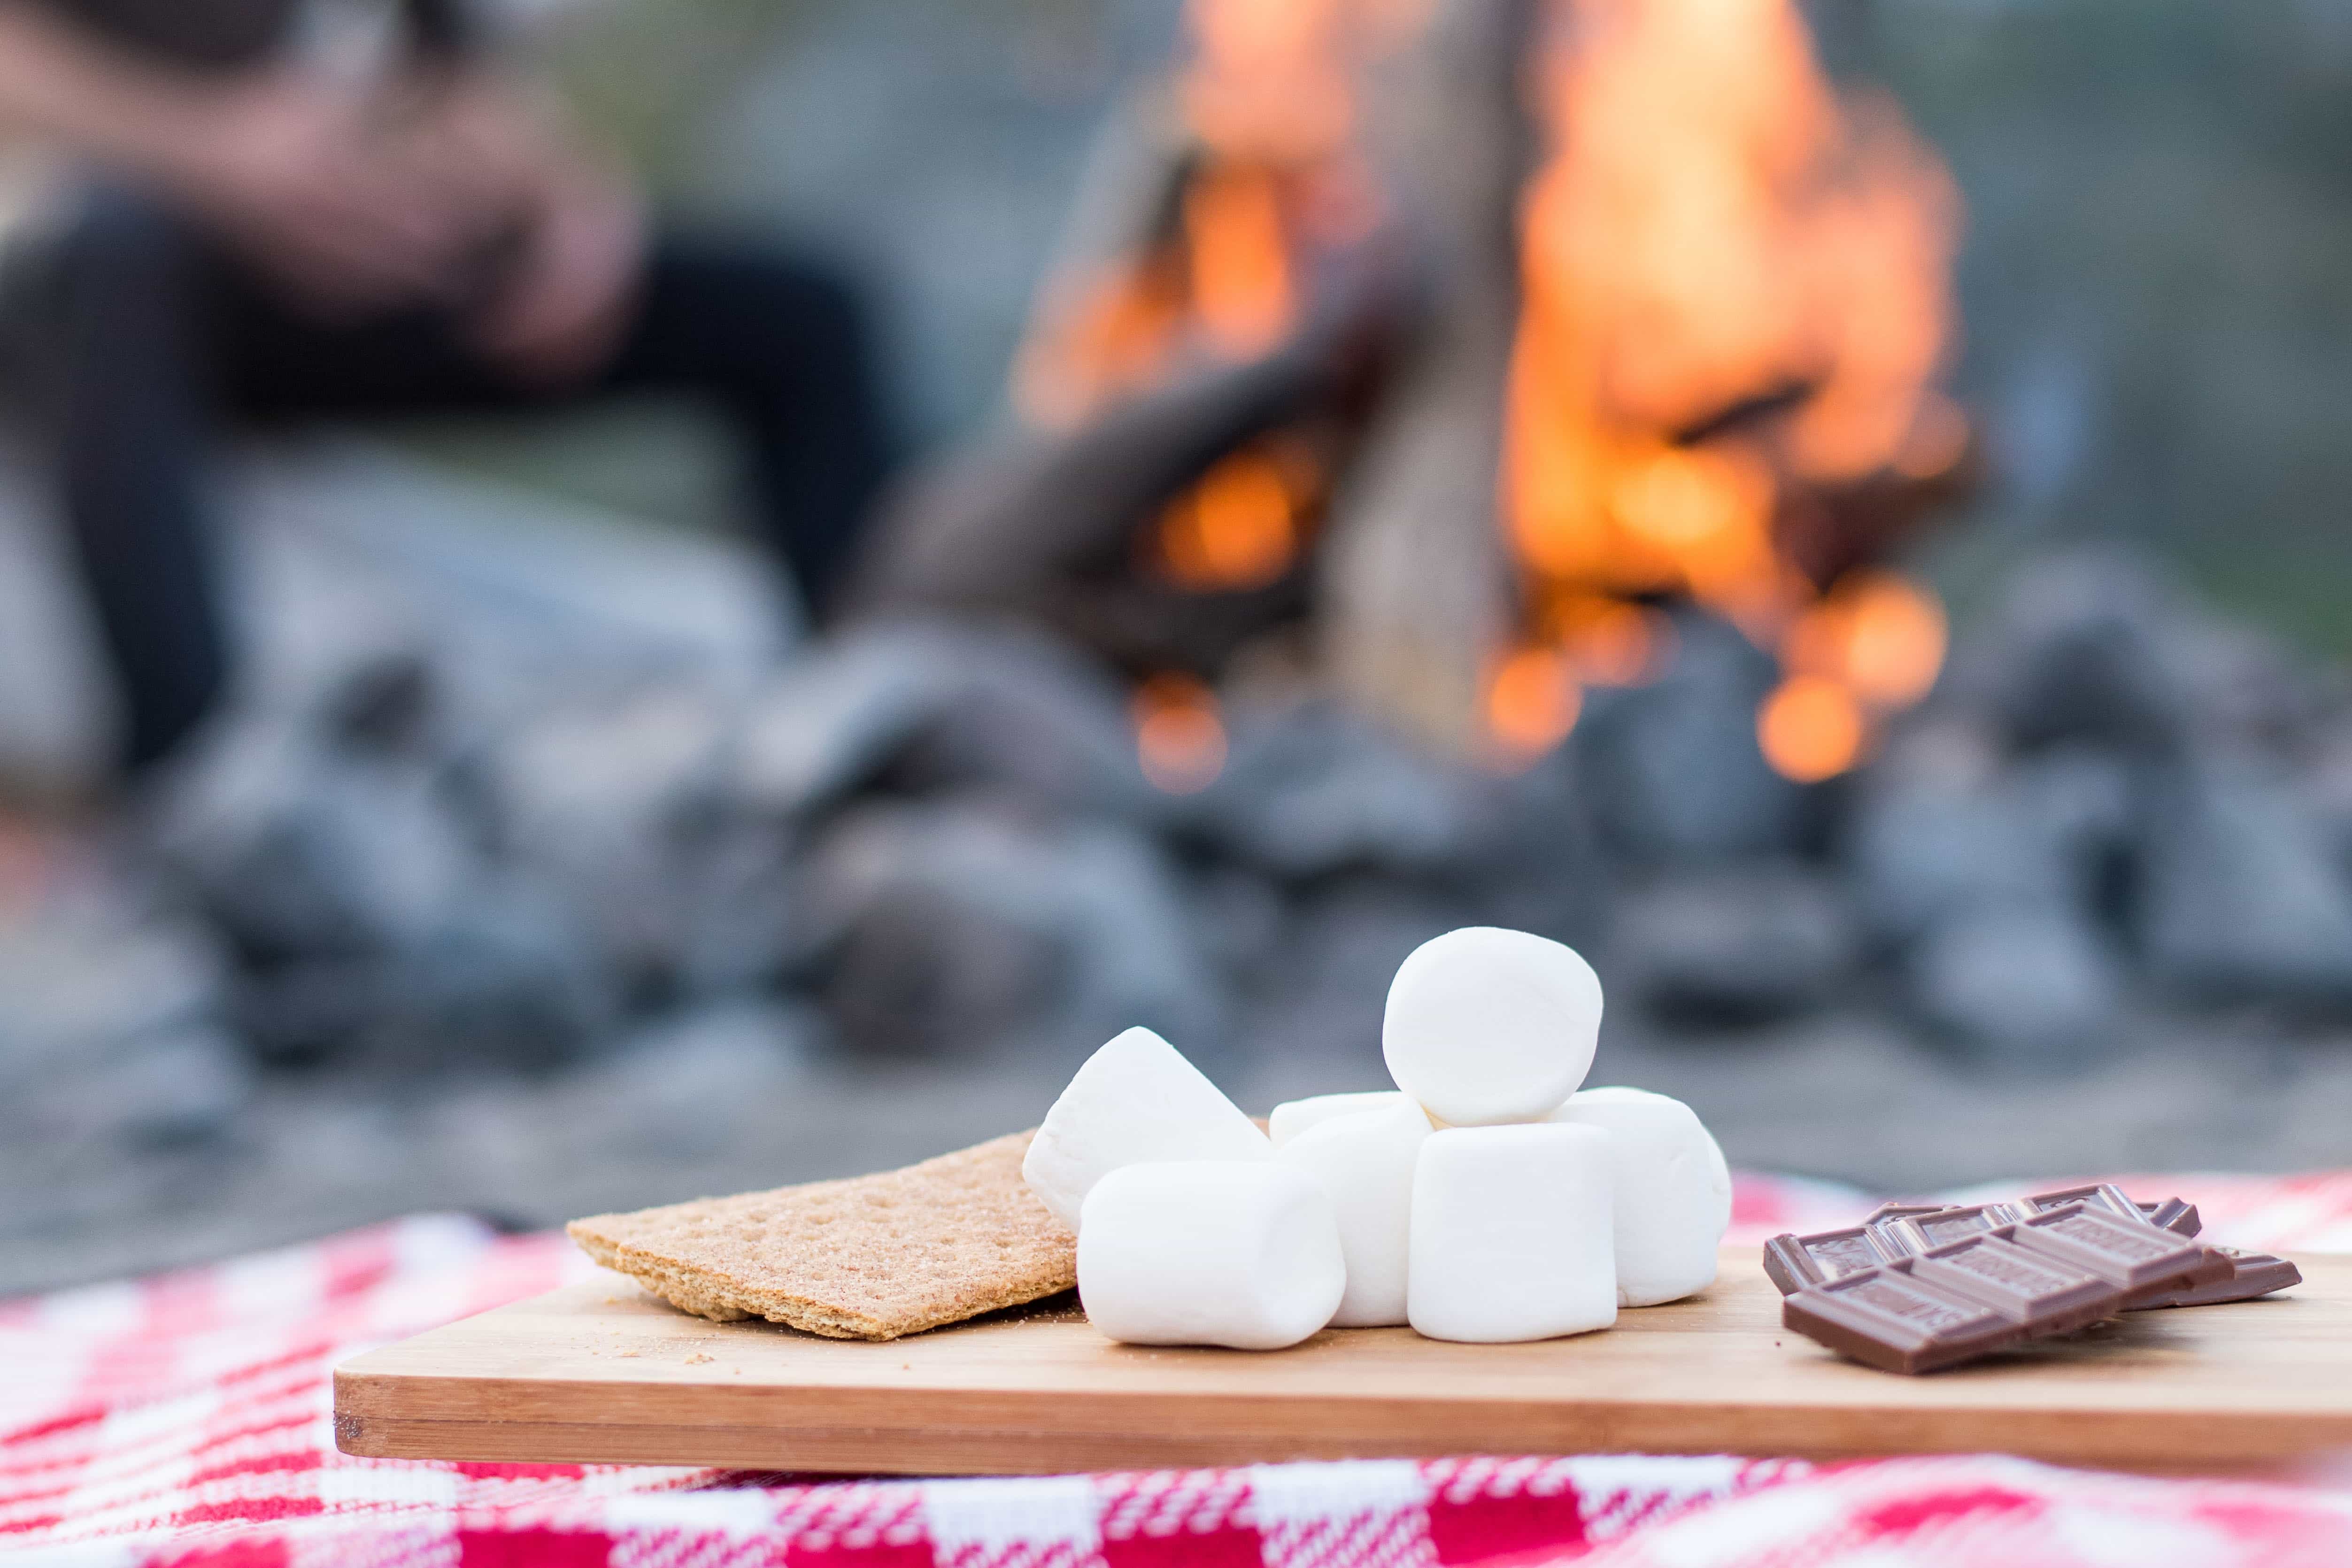 Preparing your perfect campfire smore.